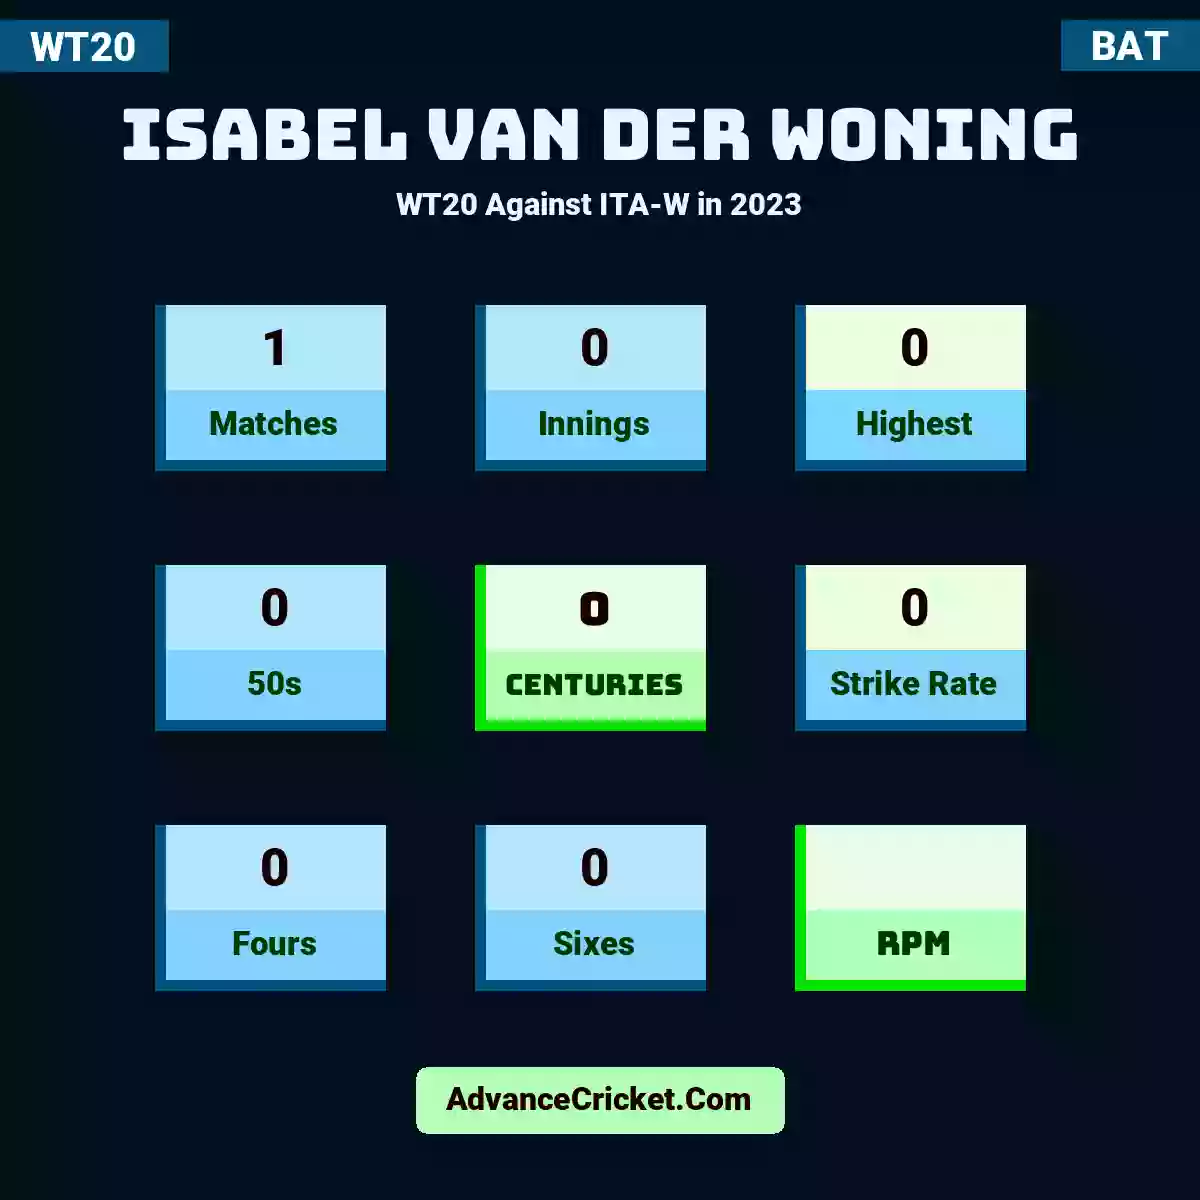 Isabel van der Woning WT20  Against ITA-W in 2023, Isabel van der Woning played 1 matches, scored 0 runs as highest, 0 half-centuries, and 0 centuries, with a strike rate of 0. I.van.der.Woning hit 0 fours and 0 sixes.